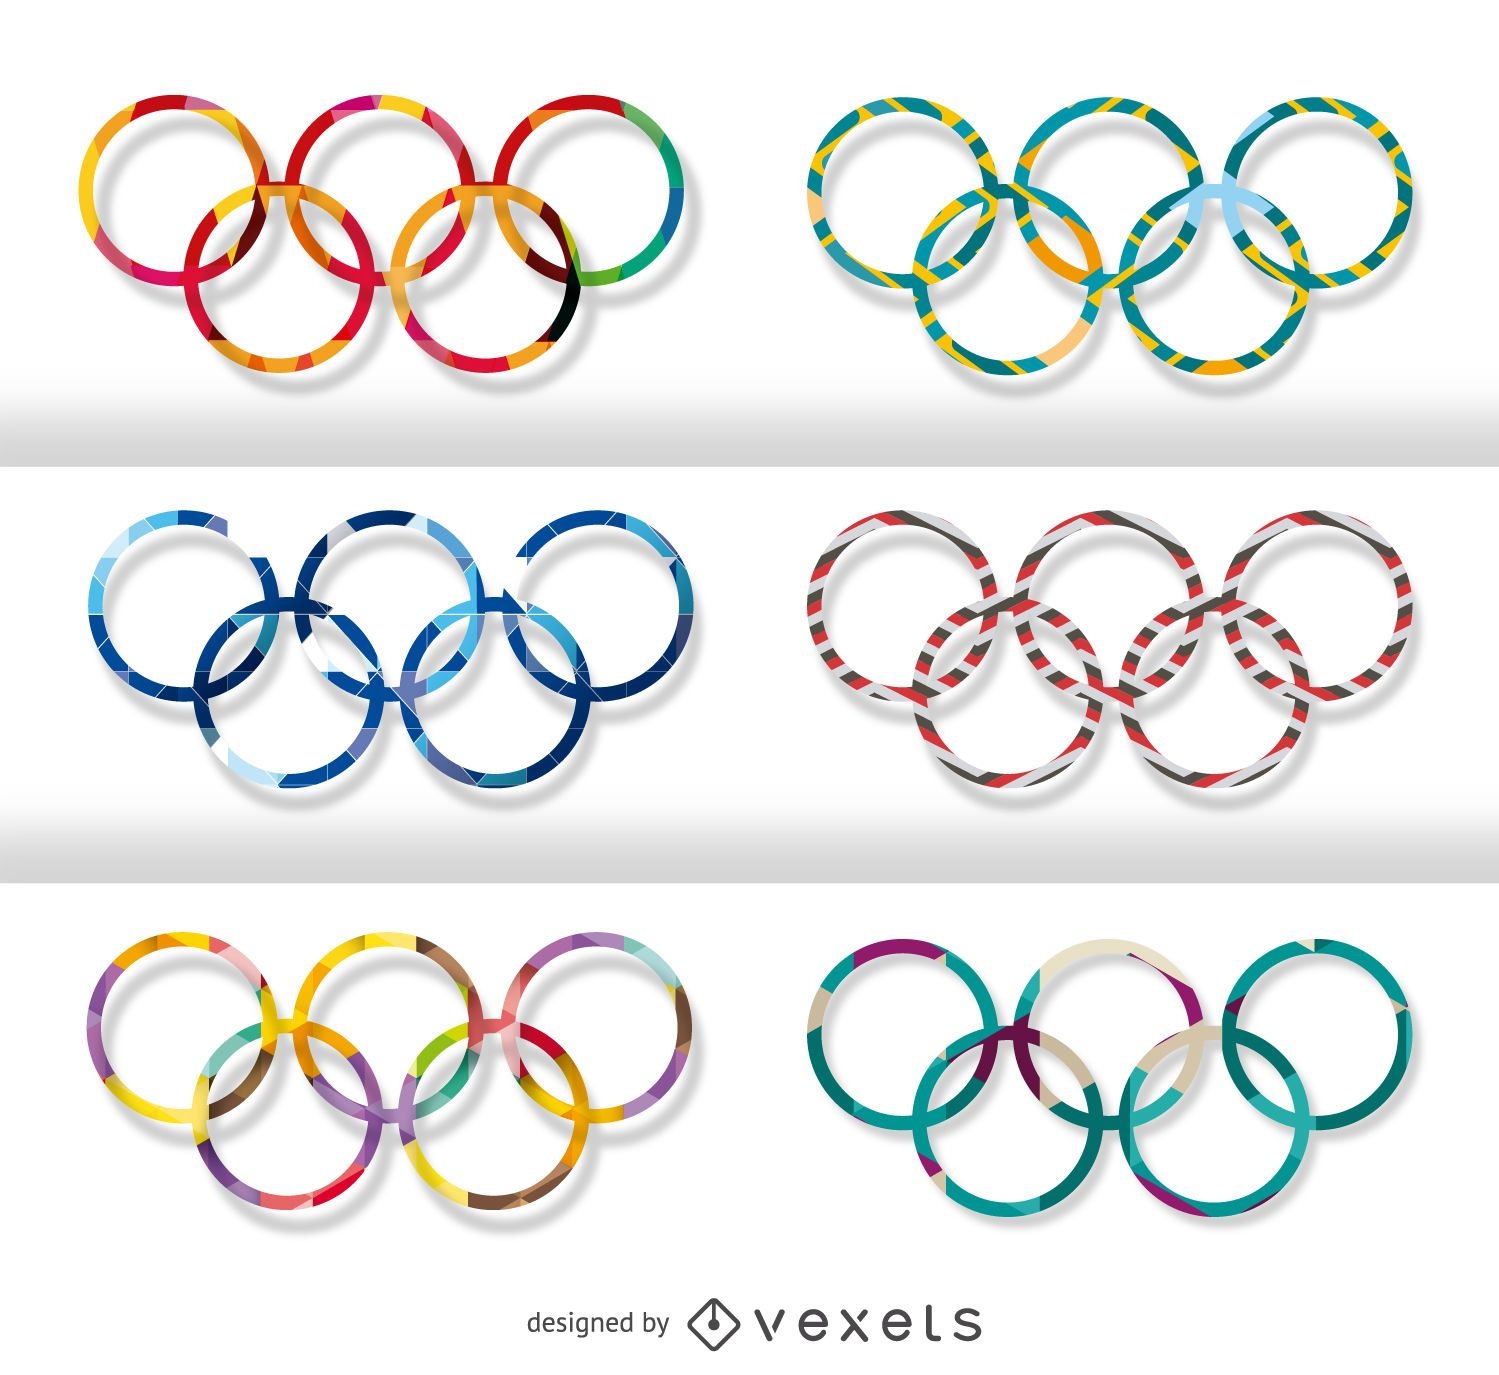 olympic rings